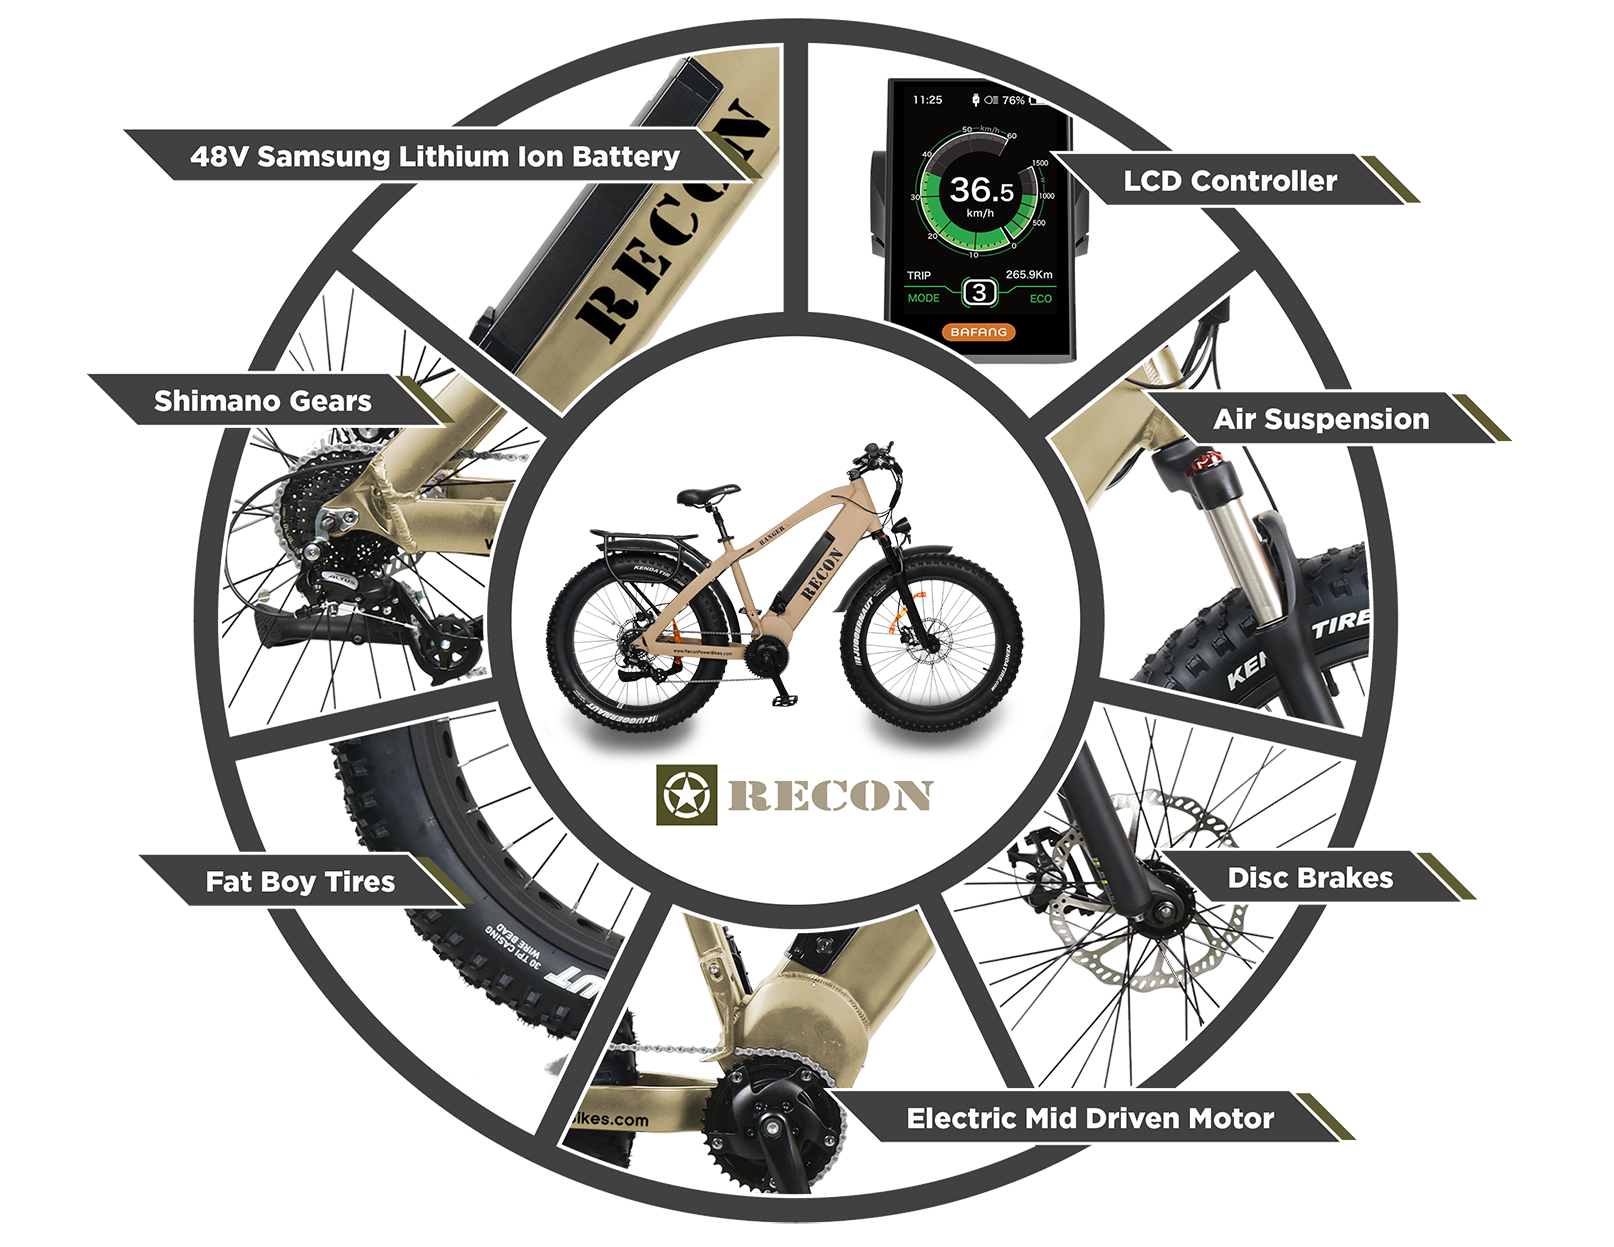 RECON INTERCEPTOR – Recon Power Bike